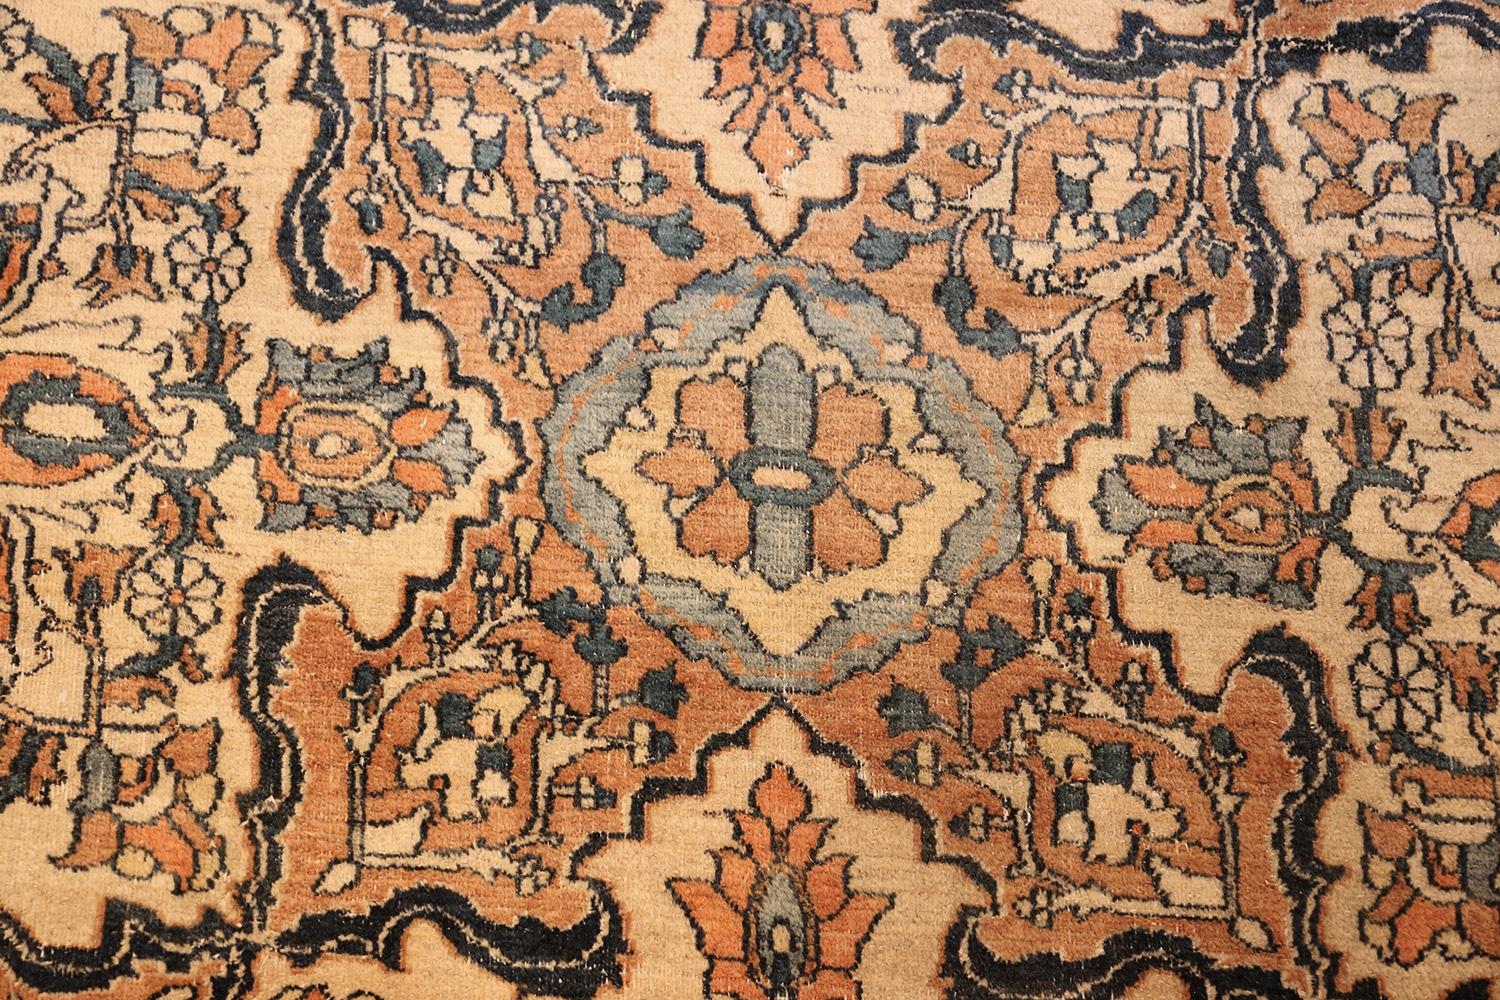 Antique Persian Khorassan Carpet, Country of Origin: Persia, Circa date: 1900. Size: 14 ft 6 in x 20 ft 7 in (4.42 m x 6.27 m)

